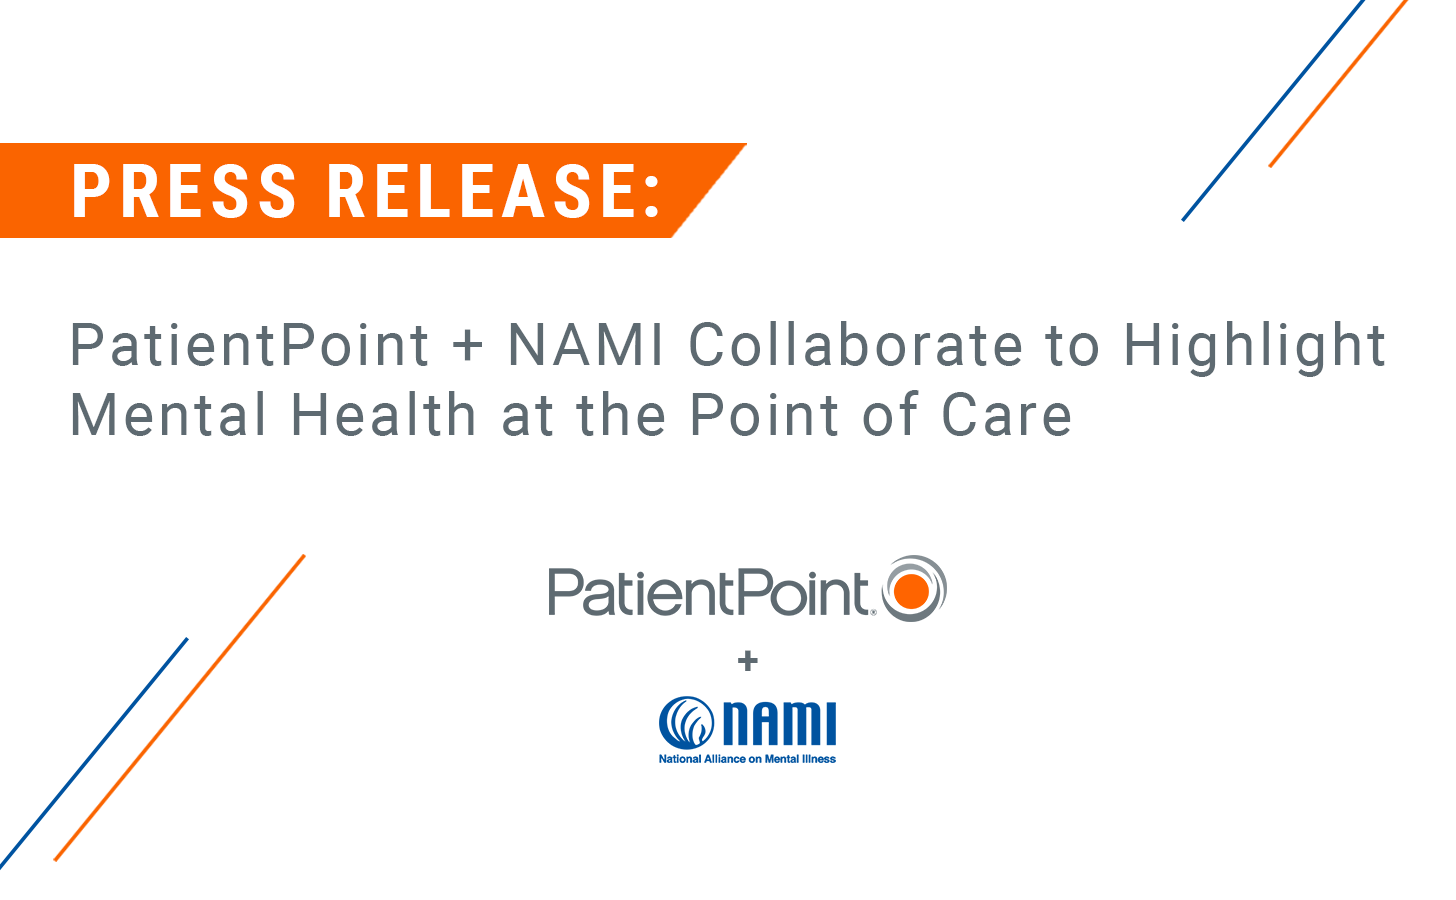 PatientPoint and NAMI logos